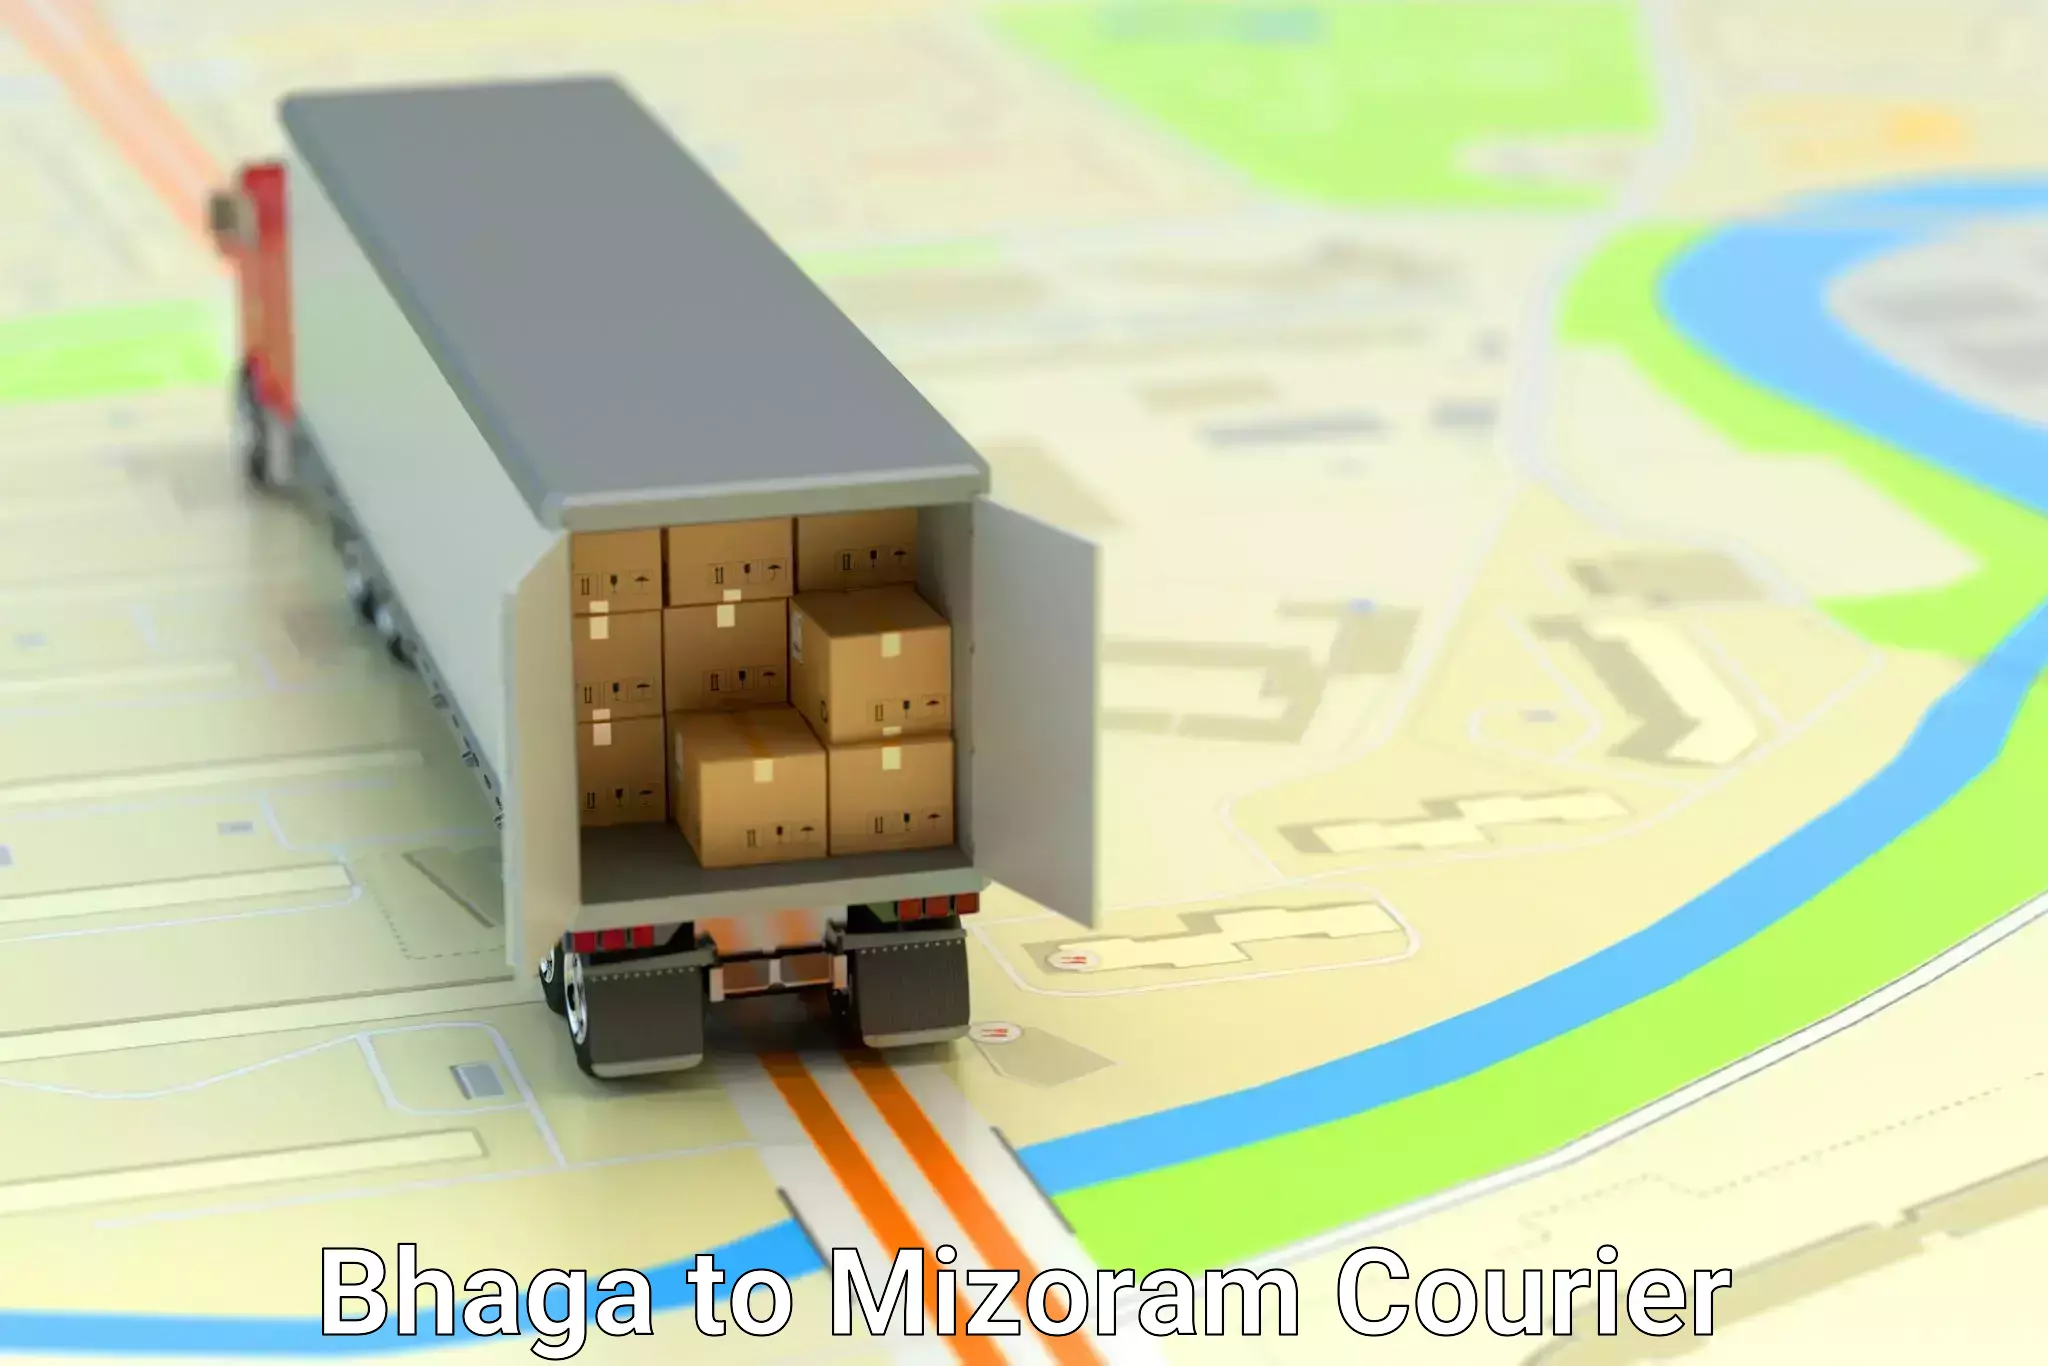 Modern courier technology Bhaga to Mizoram